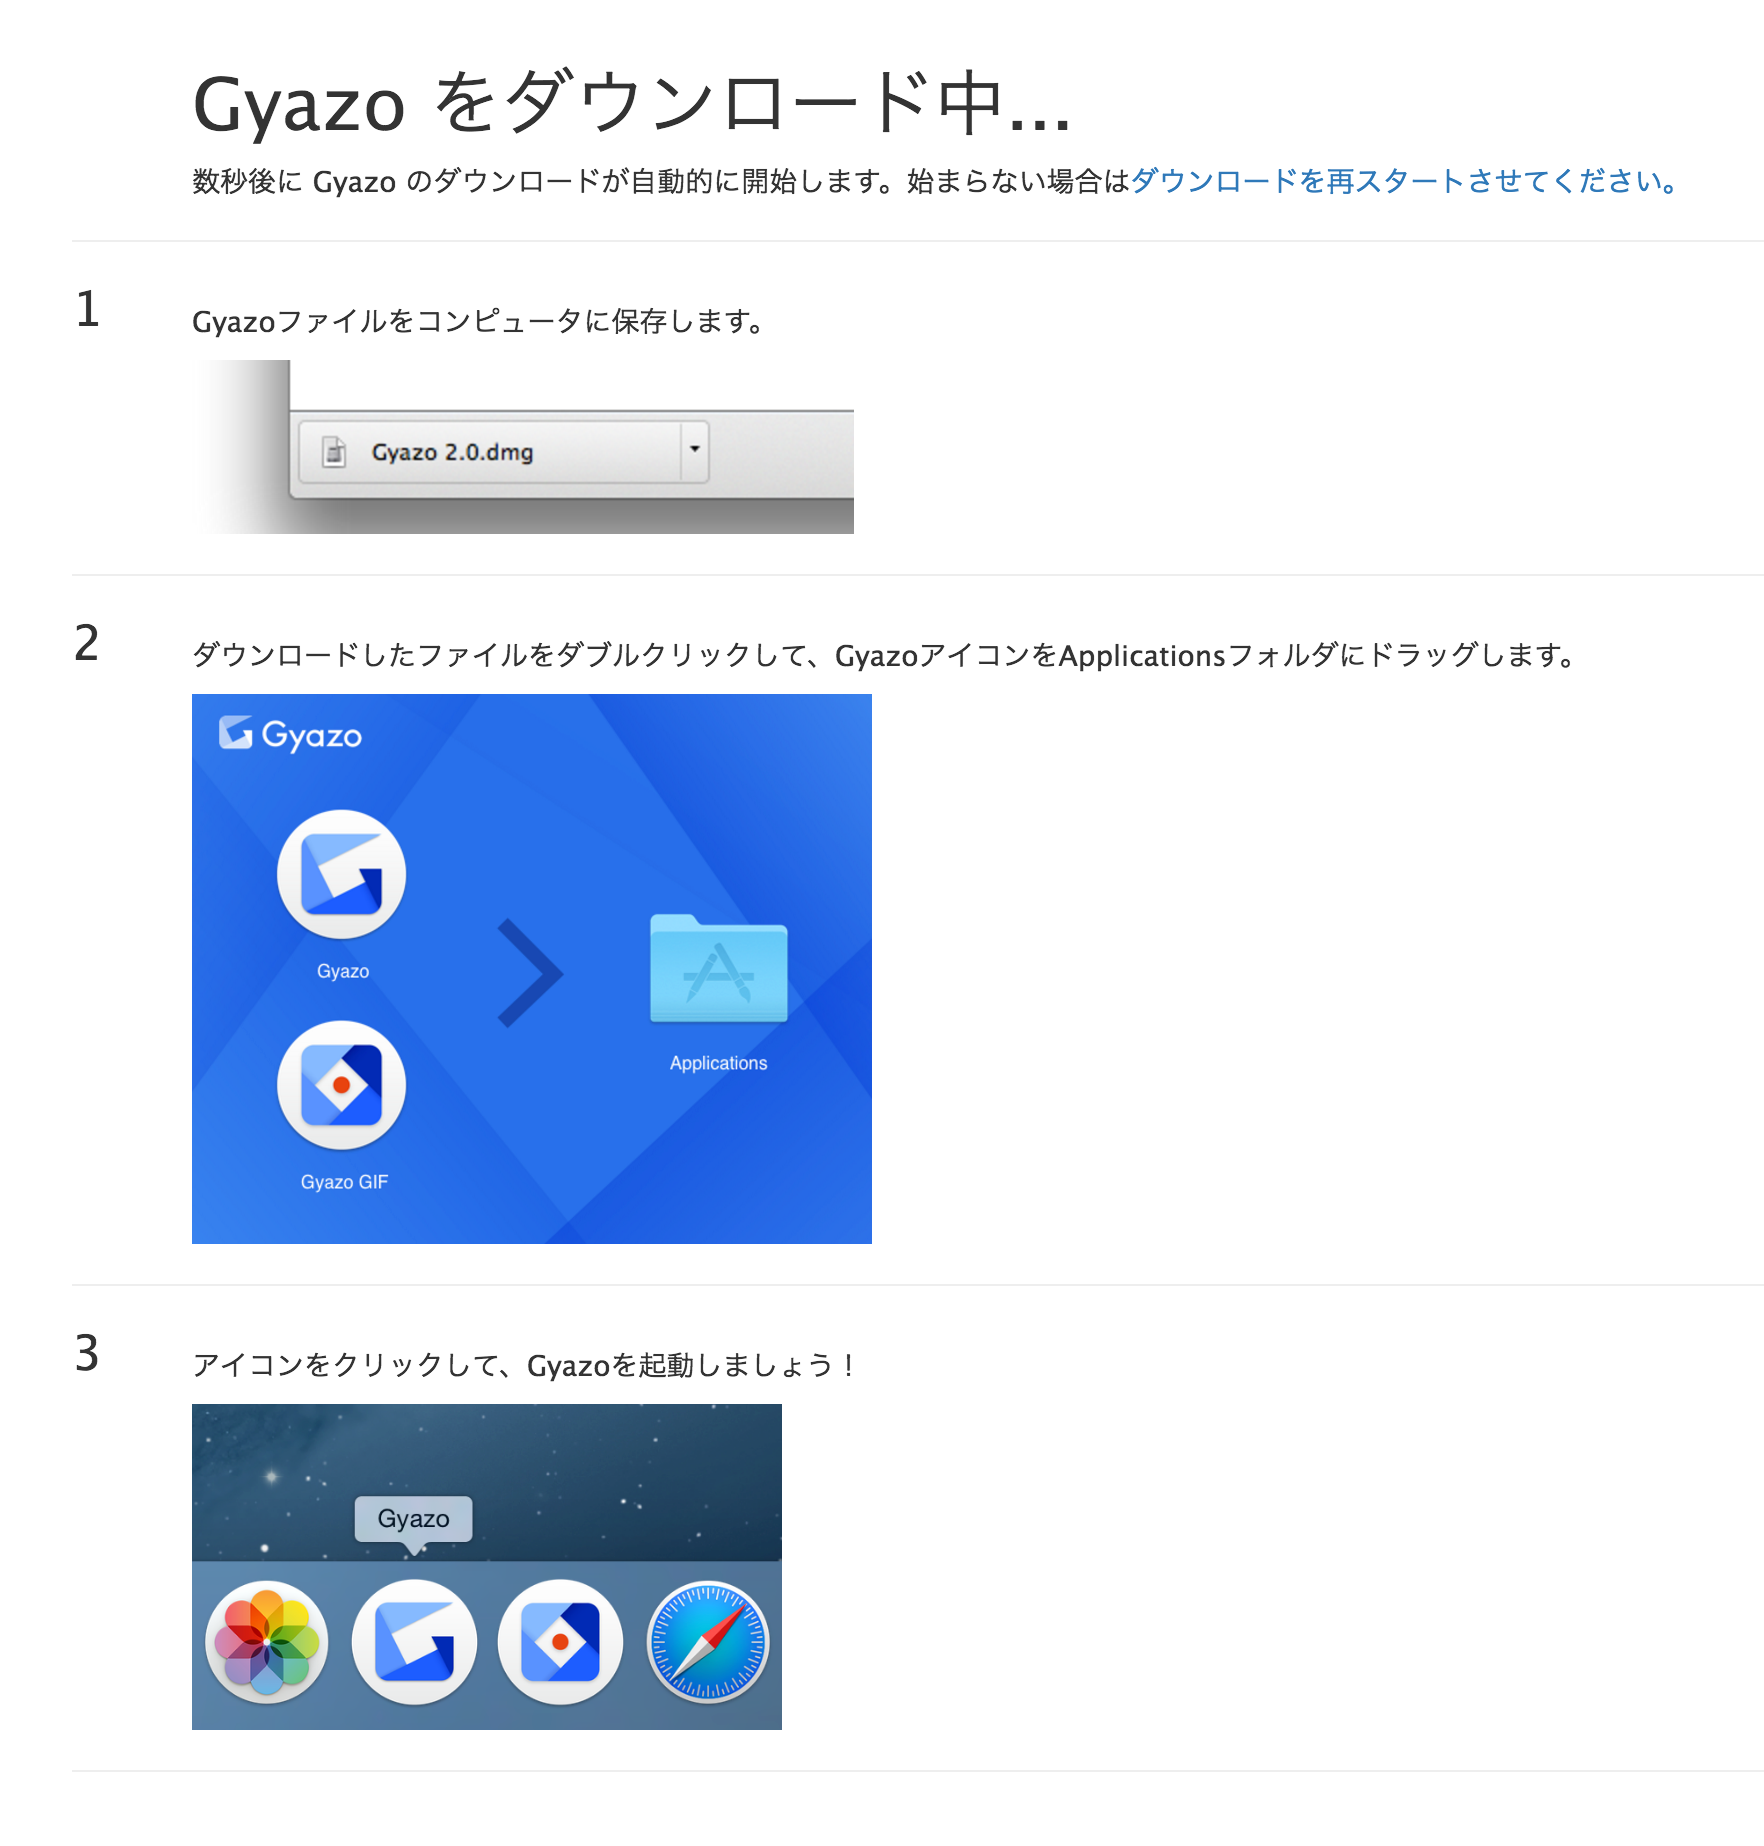 Gyazo と Gyazo GIF をインストールします。